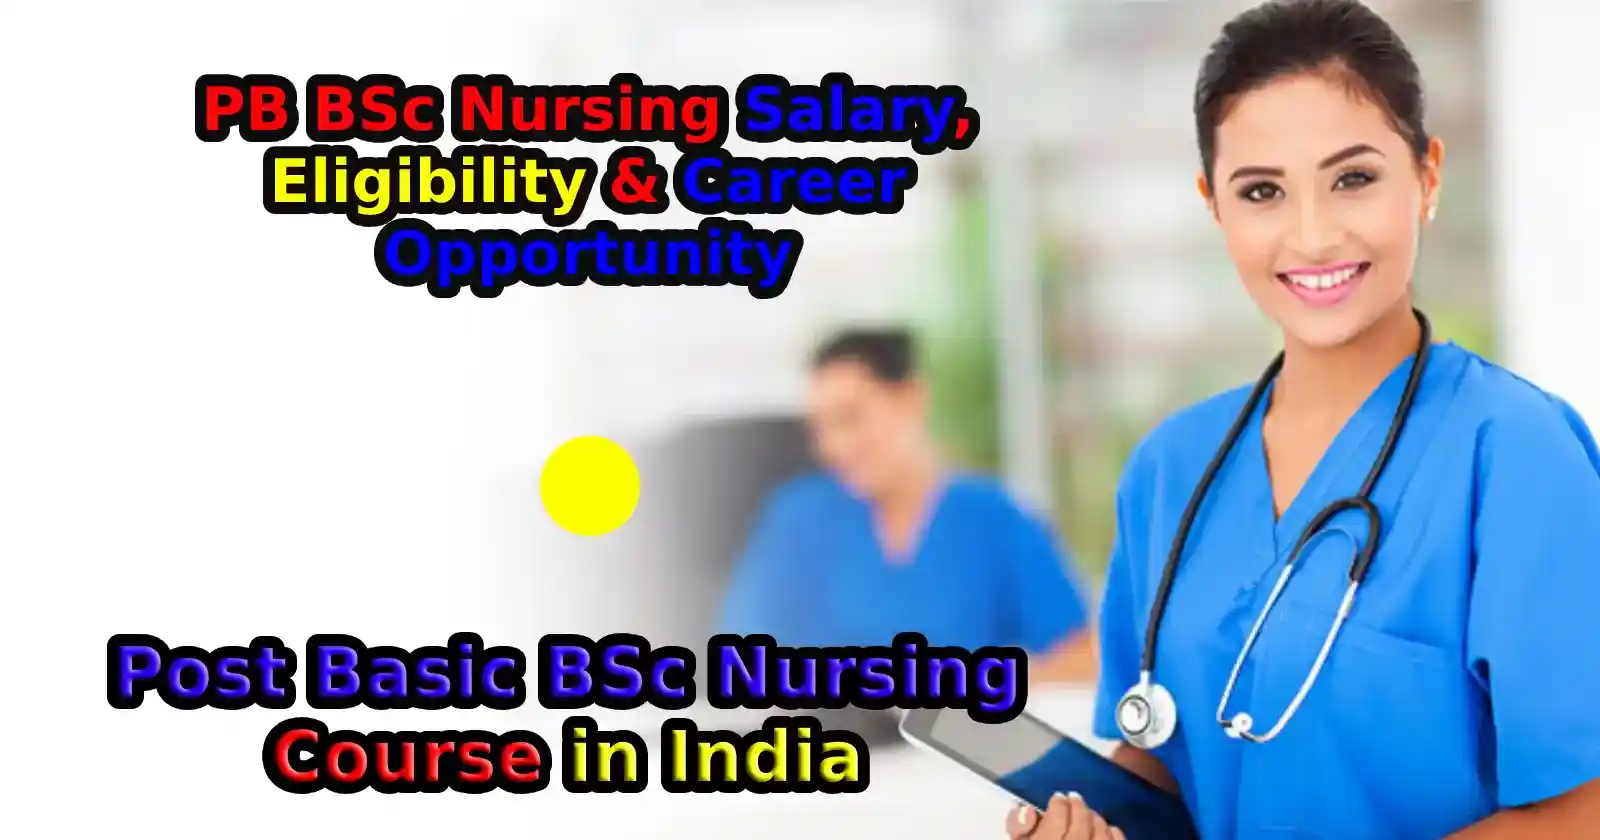 Post Basic BSc Nursing